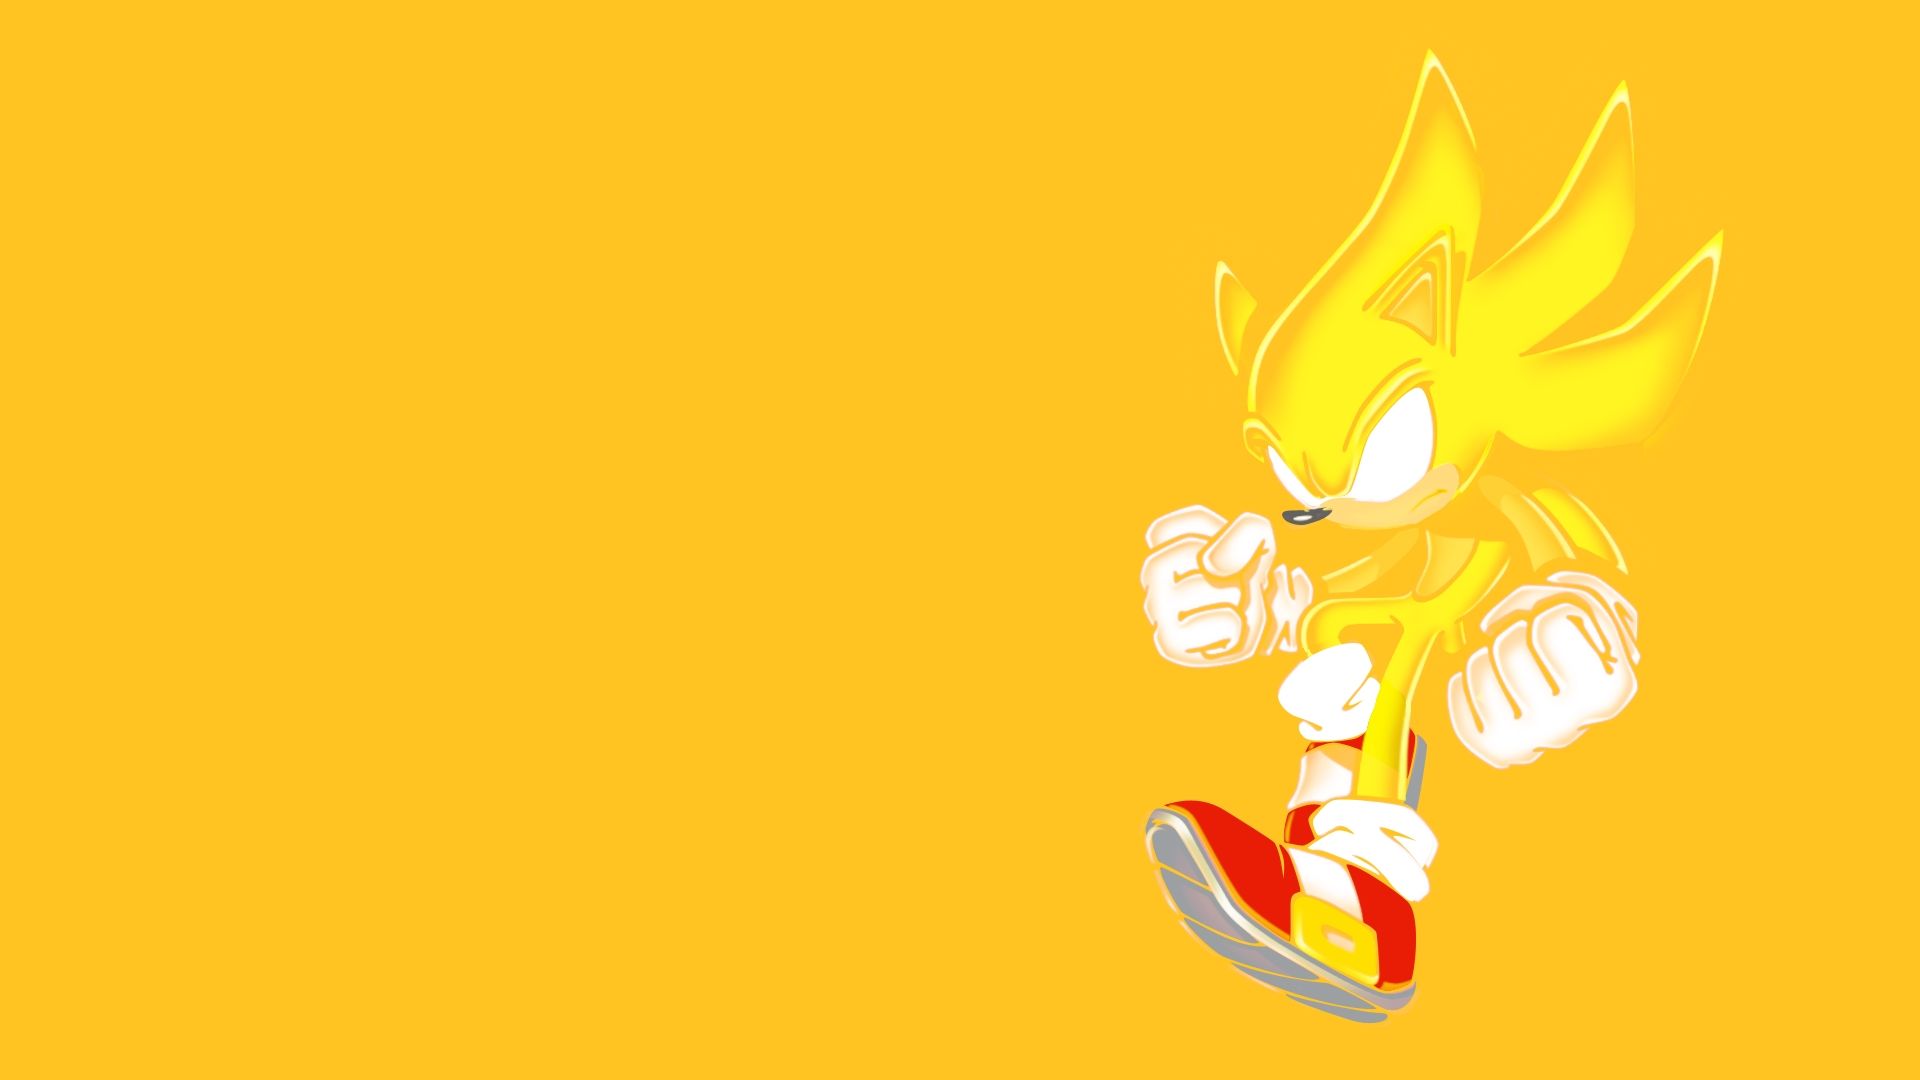 Super Sonic wallpaper, Super Sonic, the hedgehog, video games, 2560x1440 wallpaper - Sonic